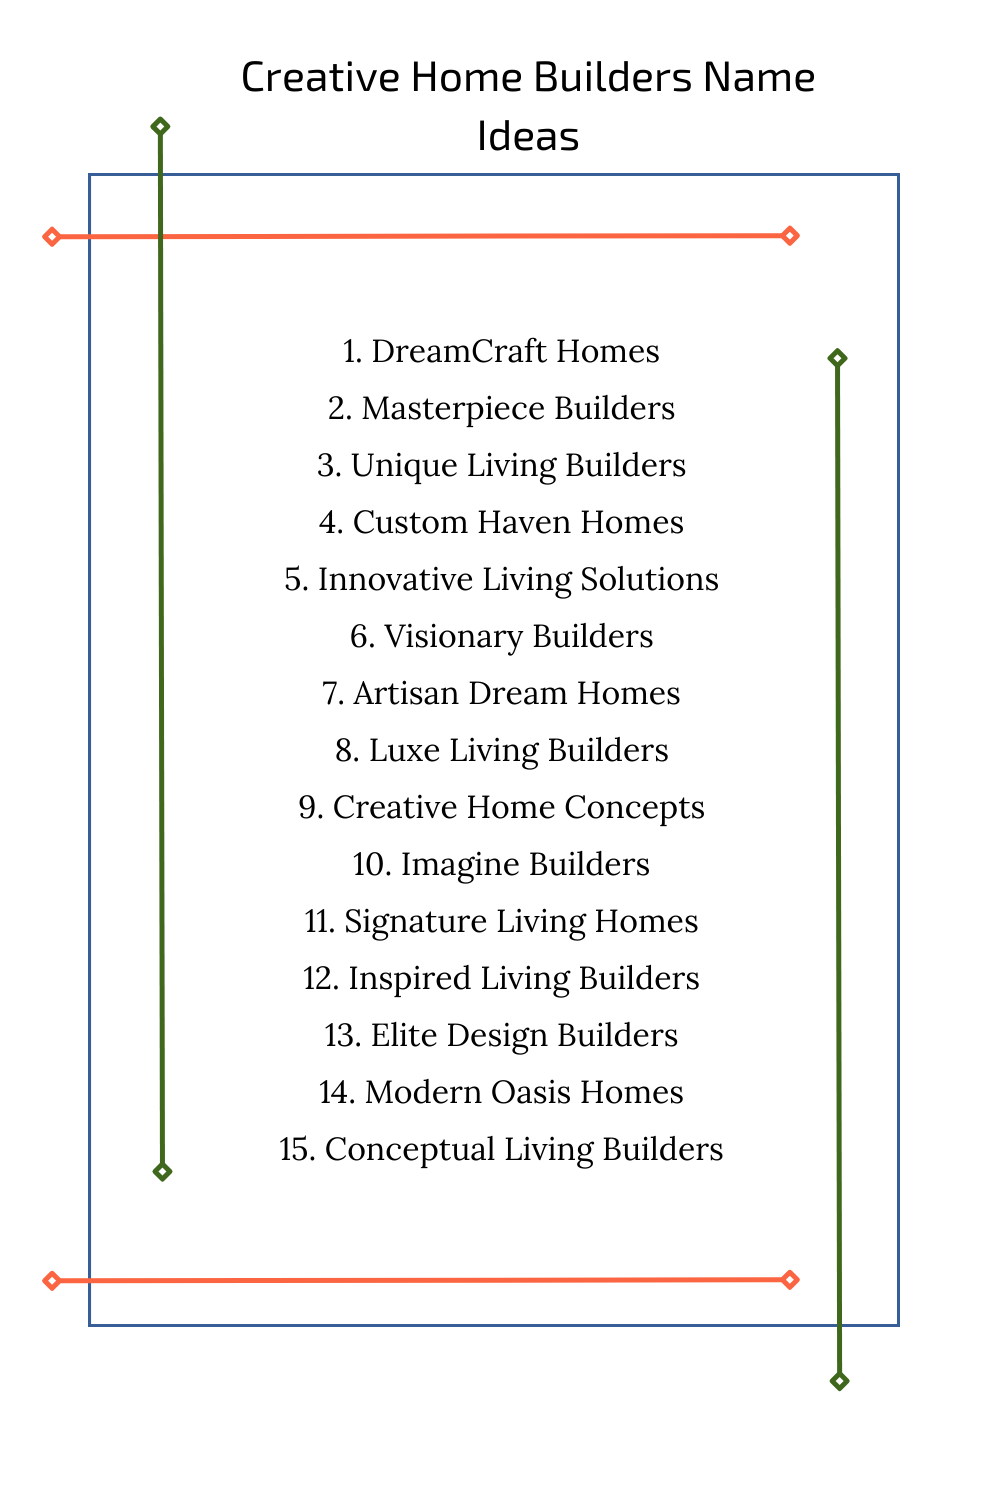 Creative Home Builders Name Ideas